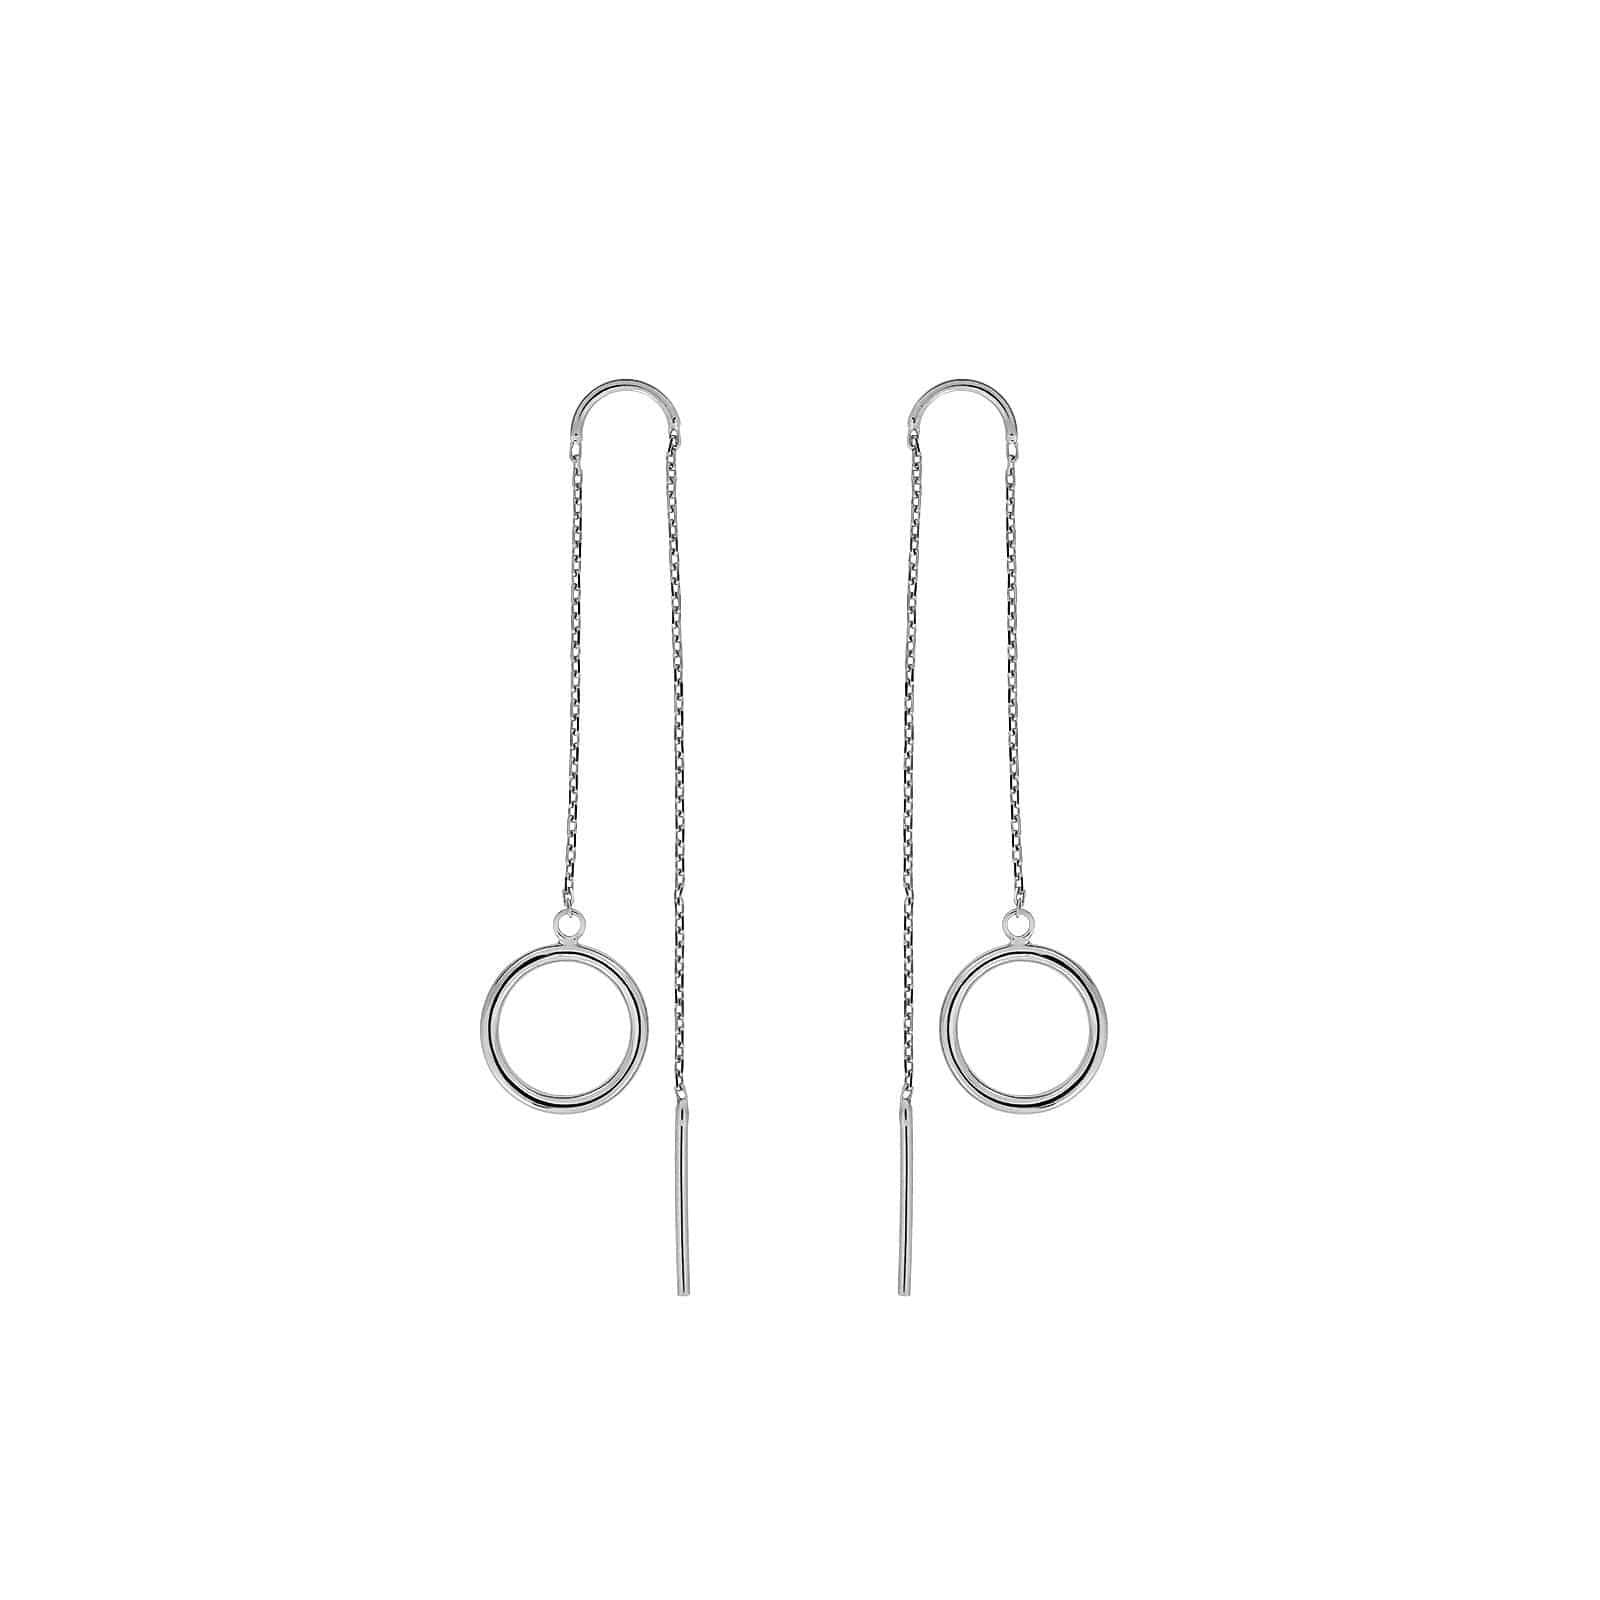 9 Carat Gold Open Circle Threader Earrings